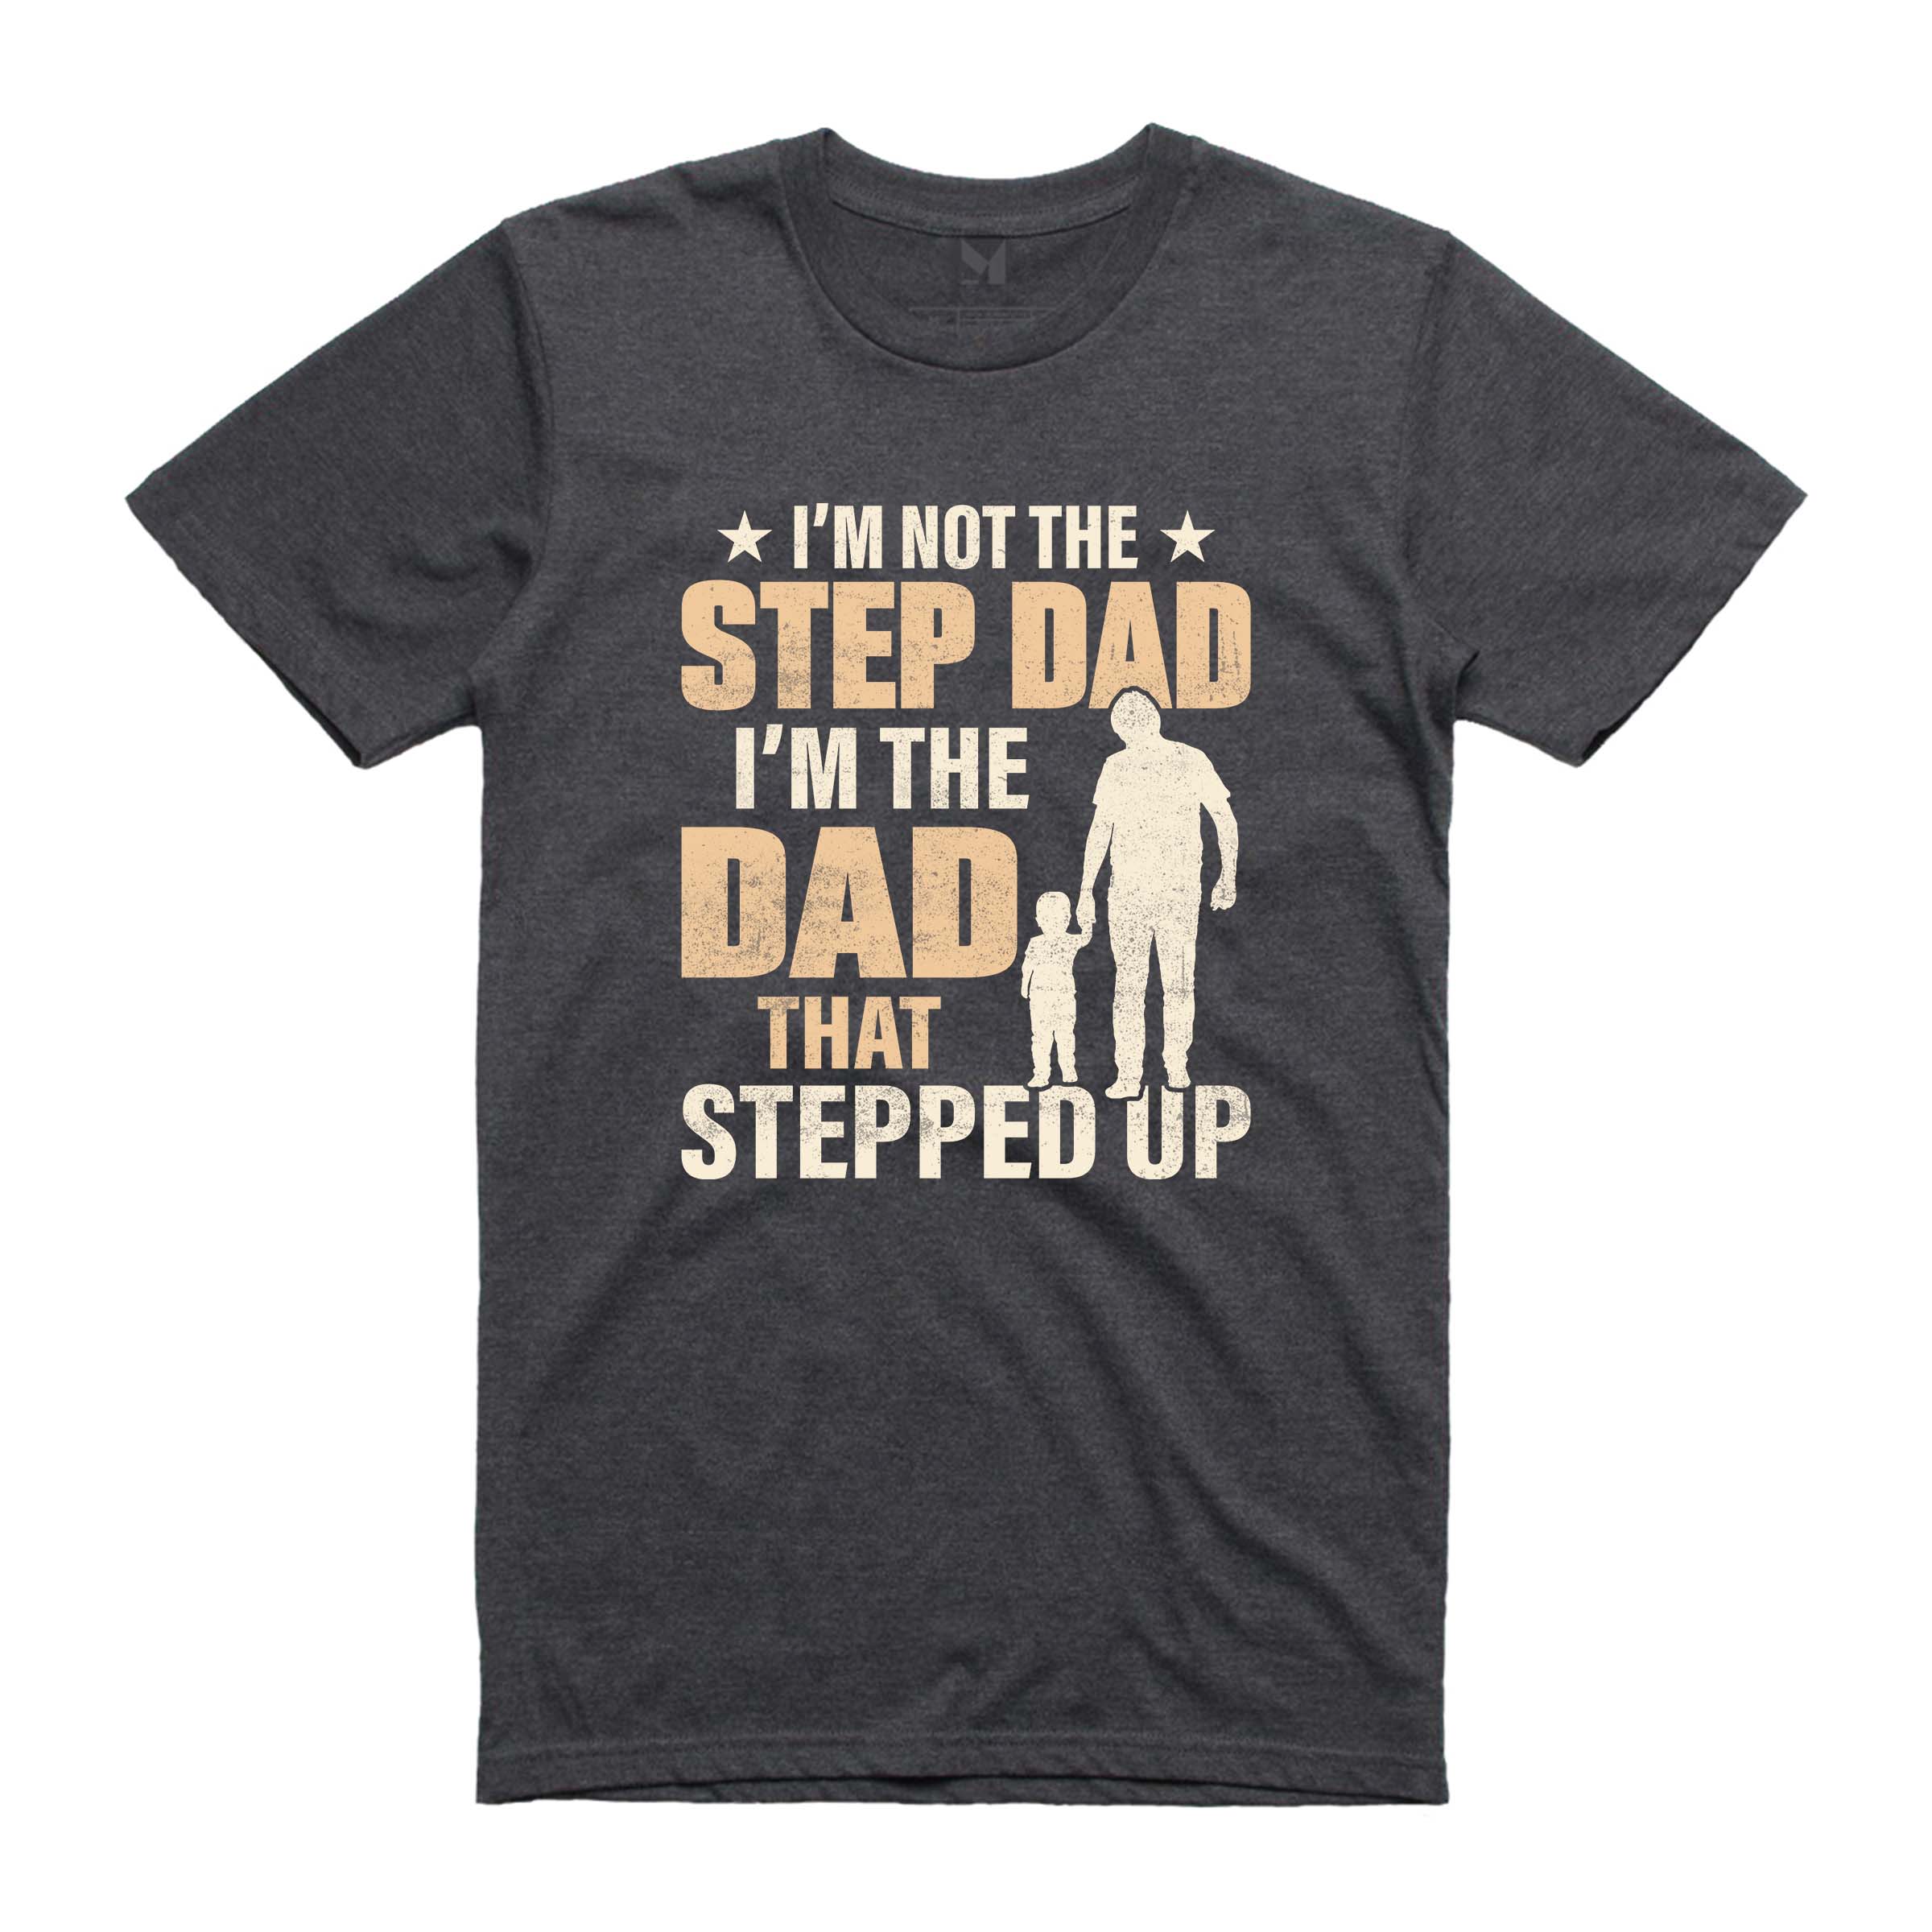 I'M NOT A STEP DAD TSHIRT A001